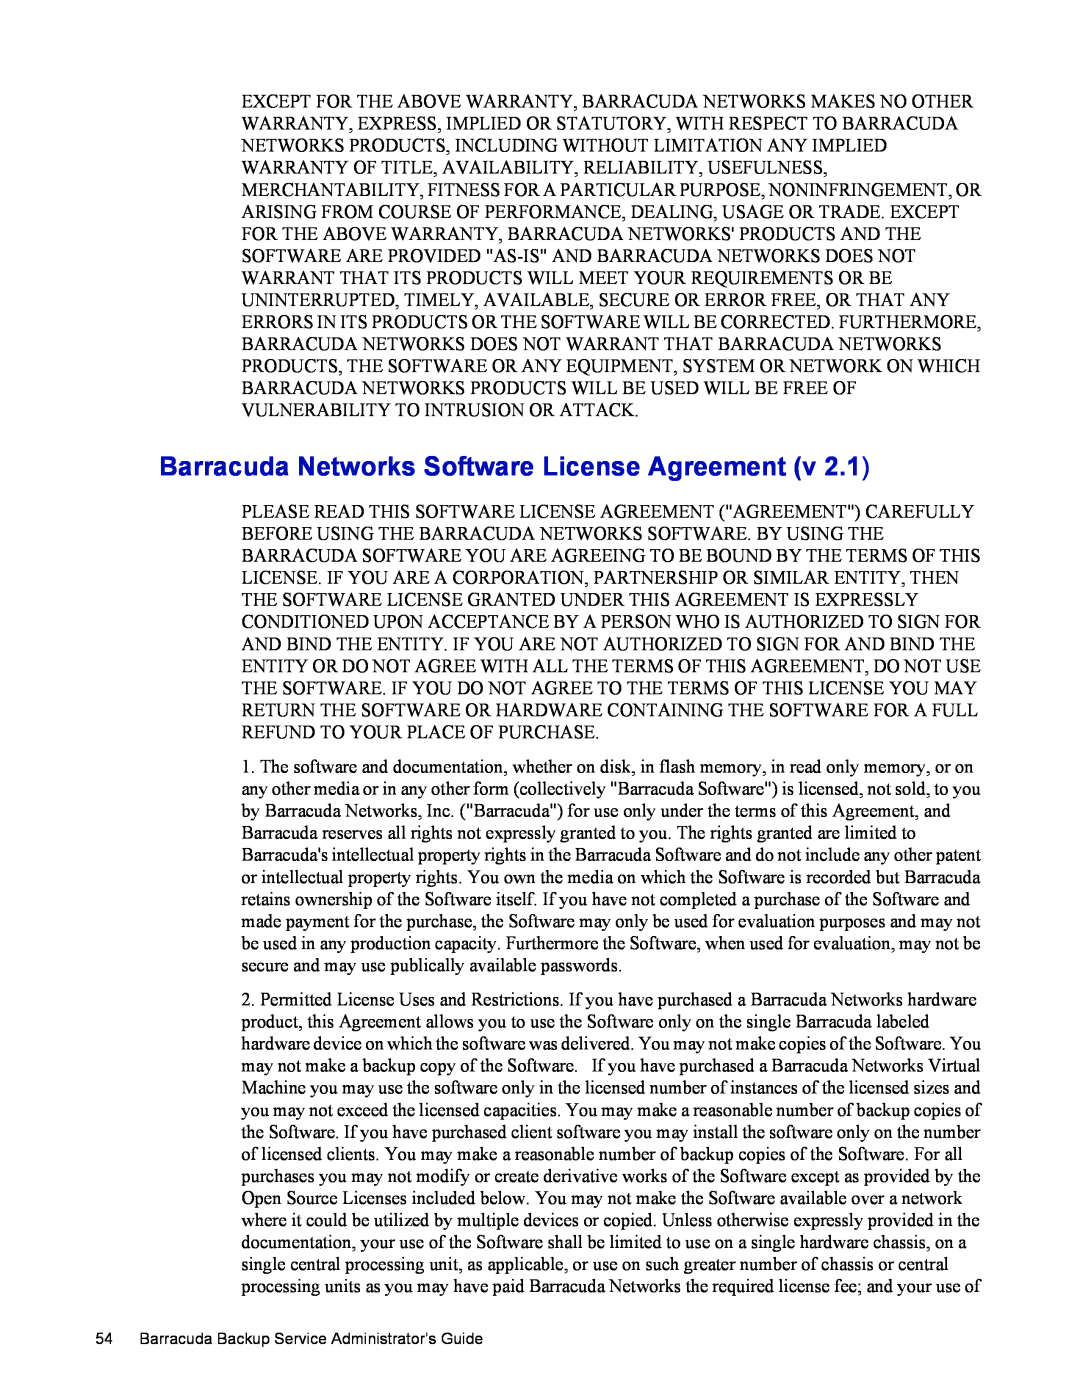 Barracuda Networks 4 manual Barracuda Networks Software License Agreement v, Barracuda Backup Service Administrator’s Guide 